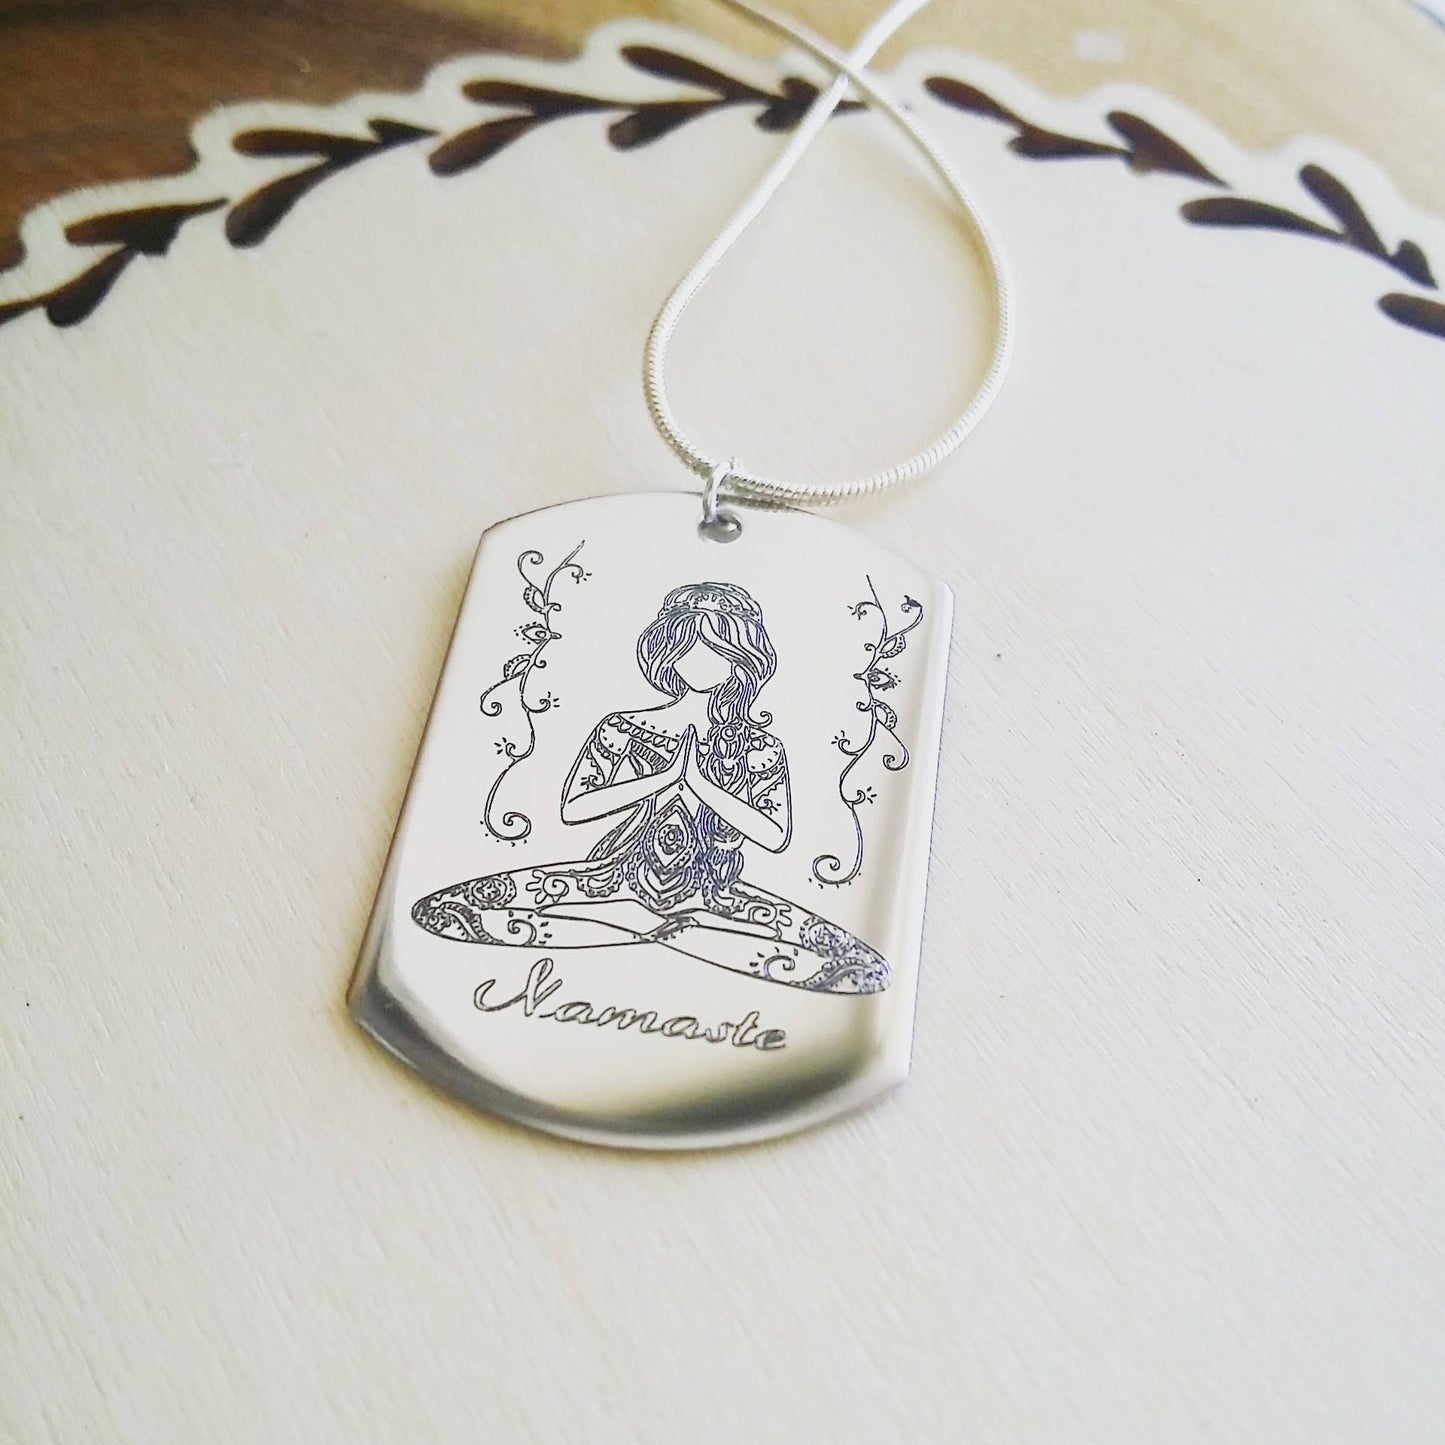 Namaste necklace, yoga pose engraved on silver necklace